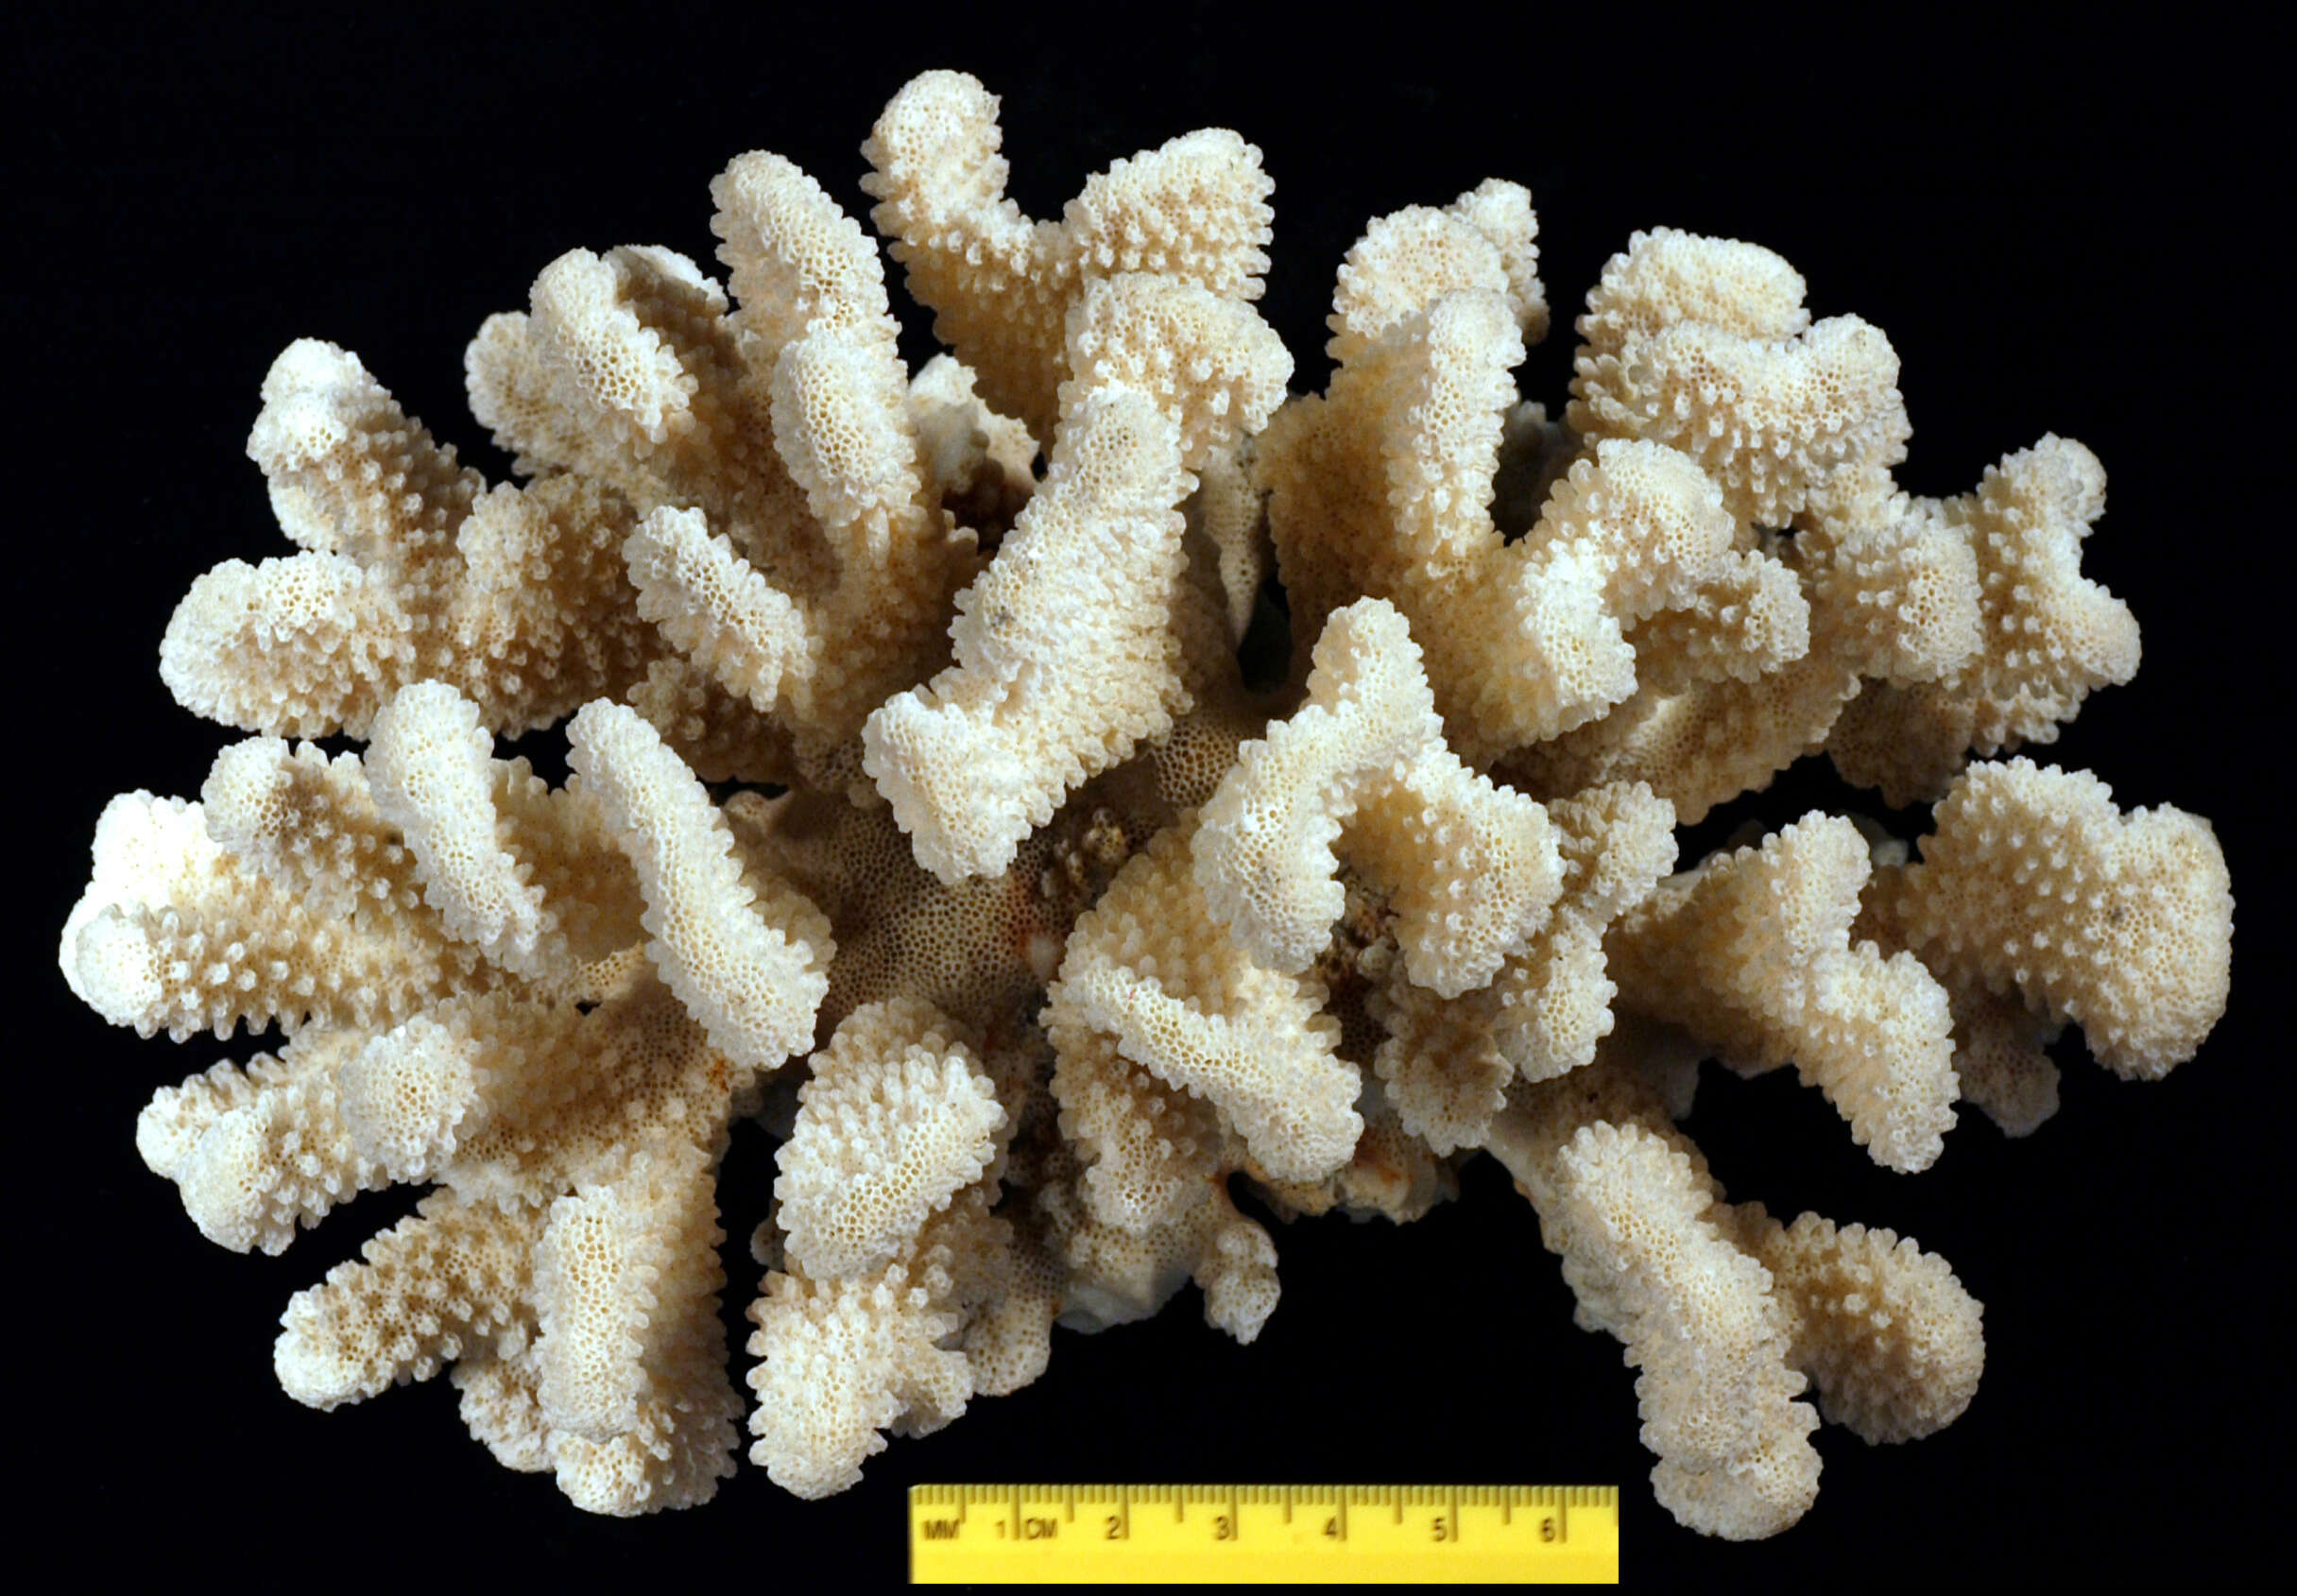 Image of cauliflower coral